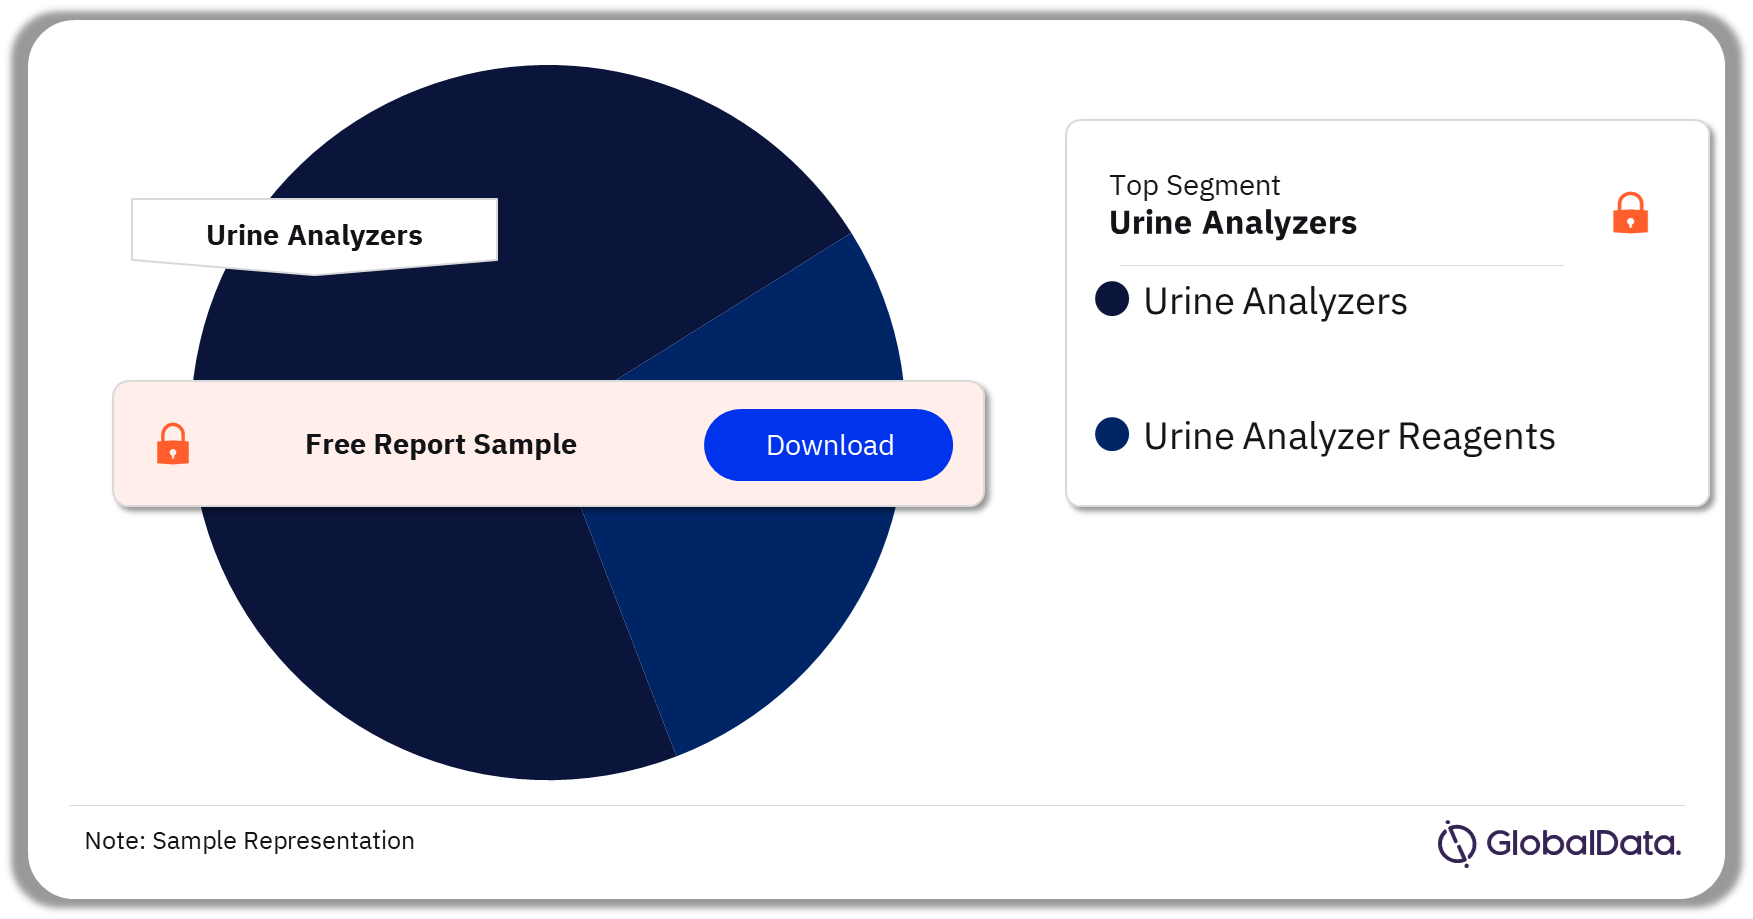 Urine Analysis Pipeline Market Analysis by Segments, 2023 (%)